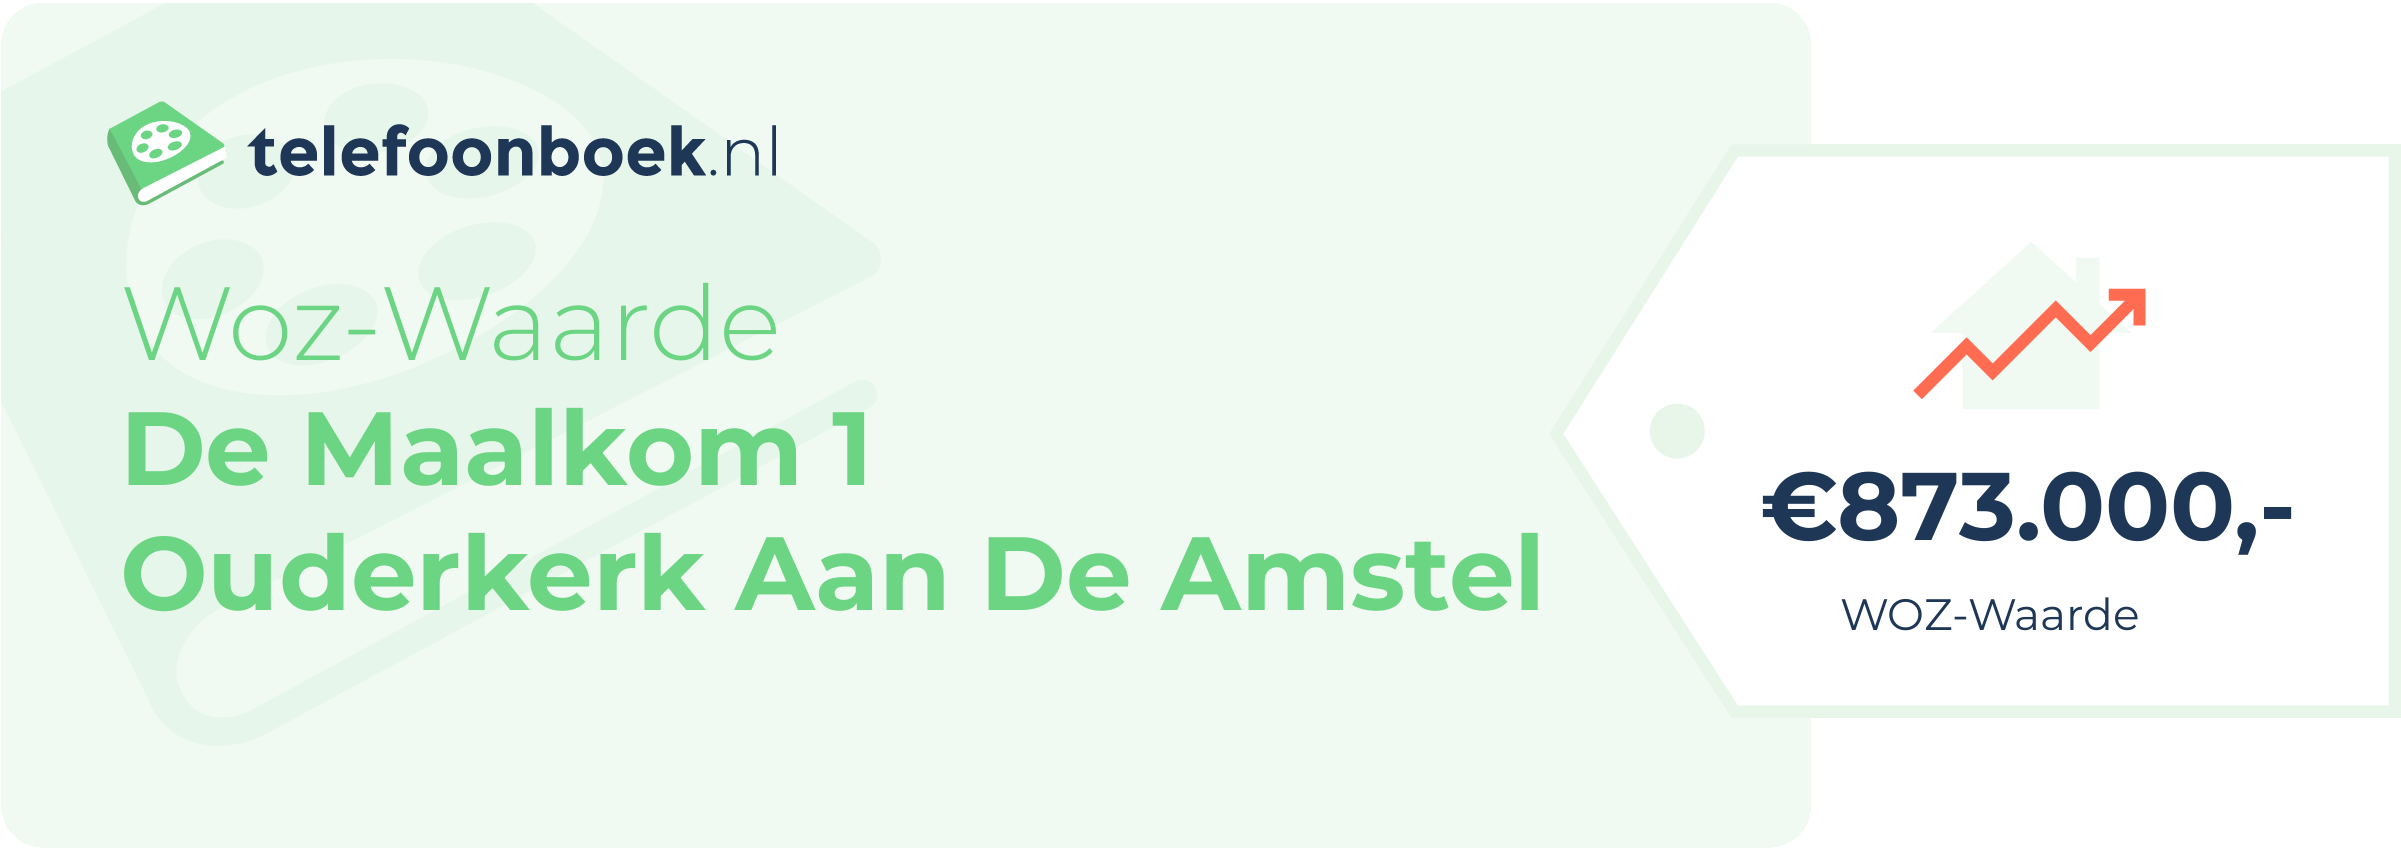 WOZ-waarde De Maalkom 1 Ouderkerk Aan De Amstel